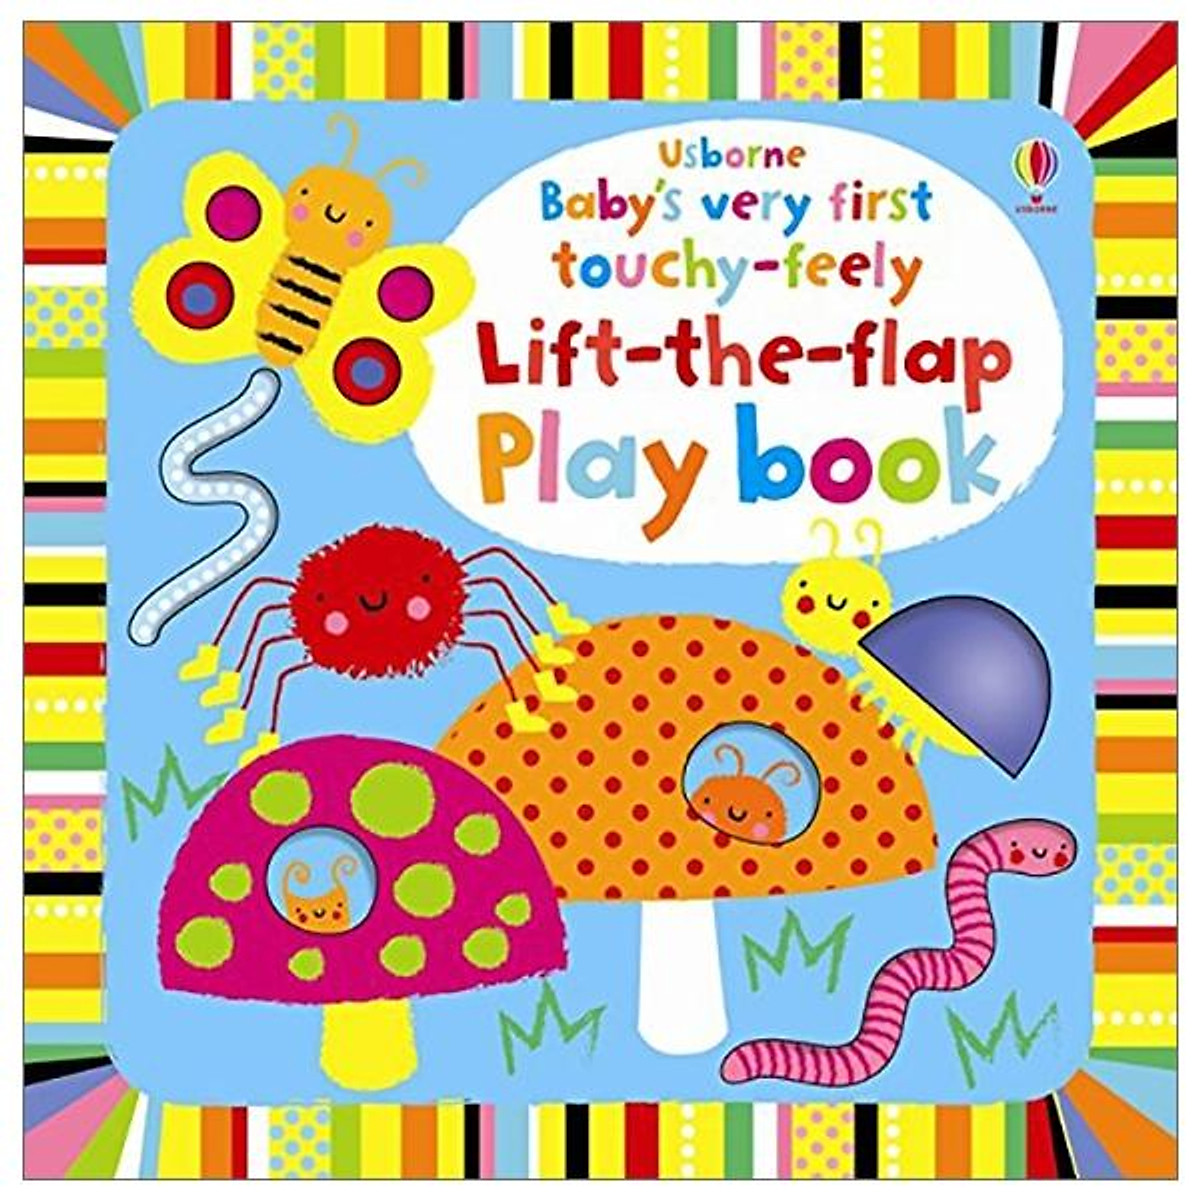 Sách tương tác tiếng Anh - Usborne Baby's very first touchy-feely Lift-the-flap Play book